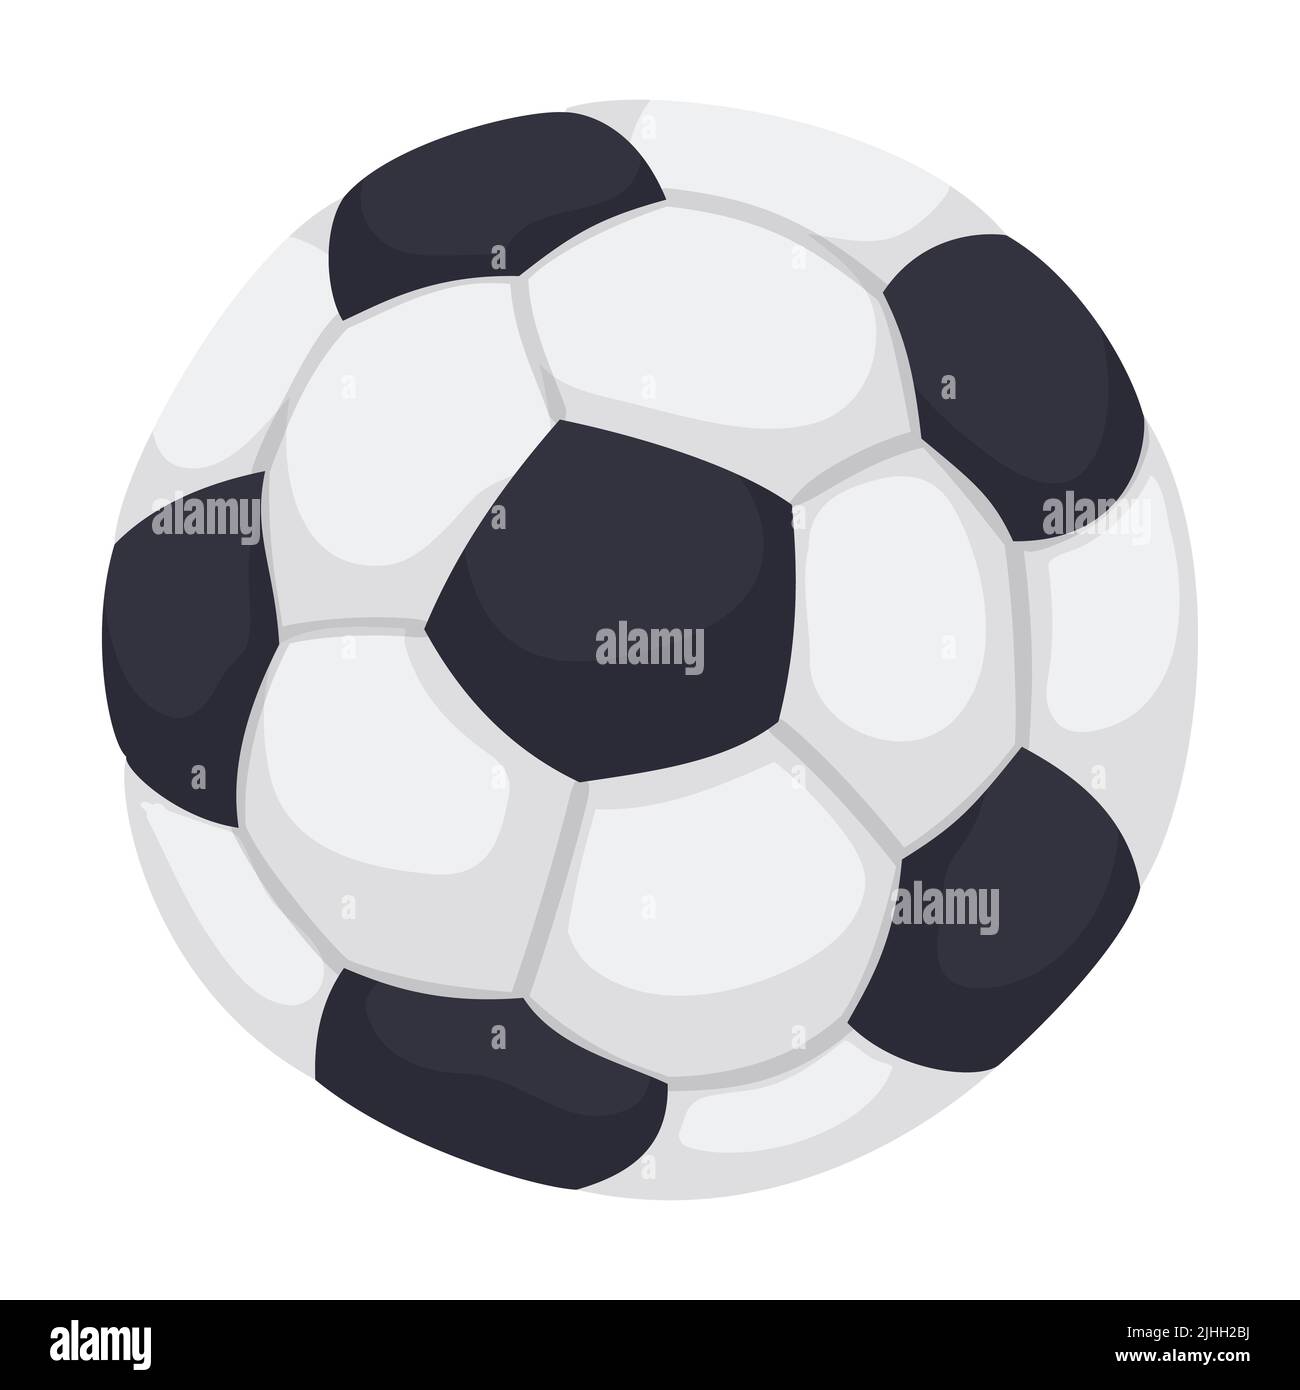 Dessin De Ballon De Football De Style Dessin Animé Isolé Sur Fond Blanc Image Vectorielle Stock 8046